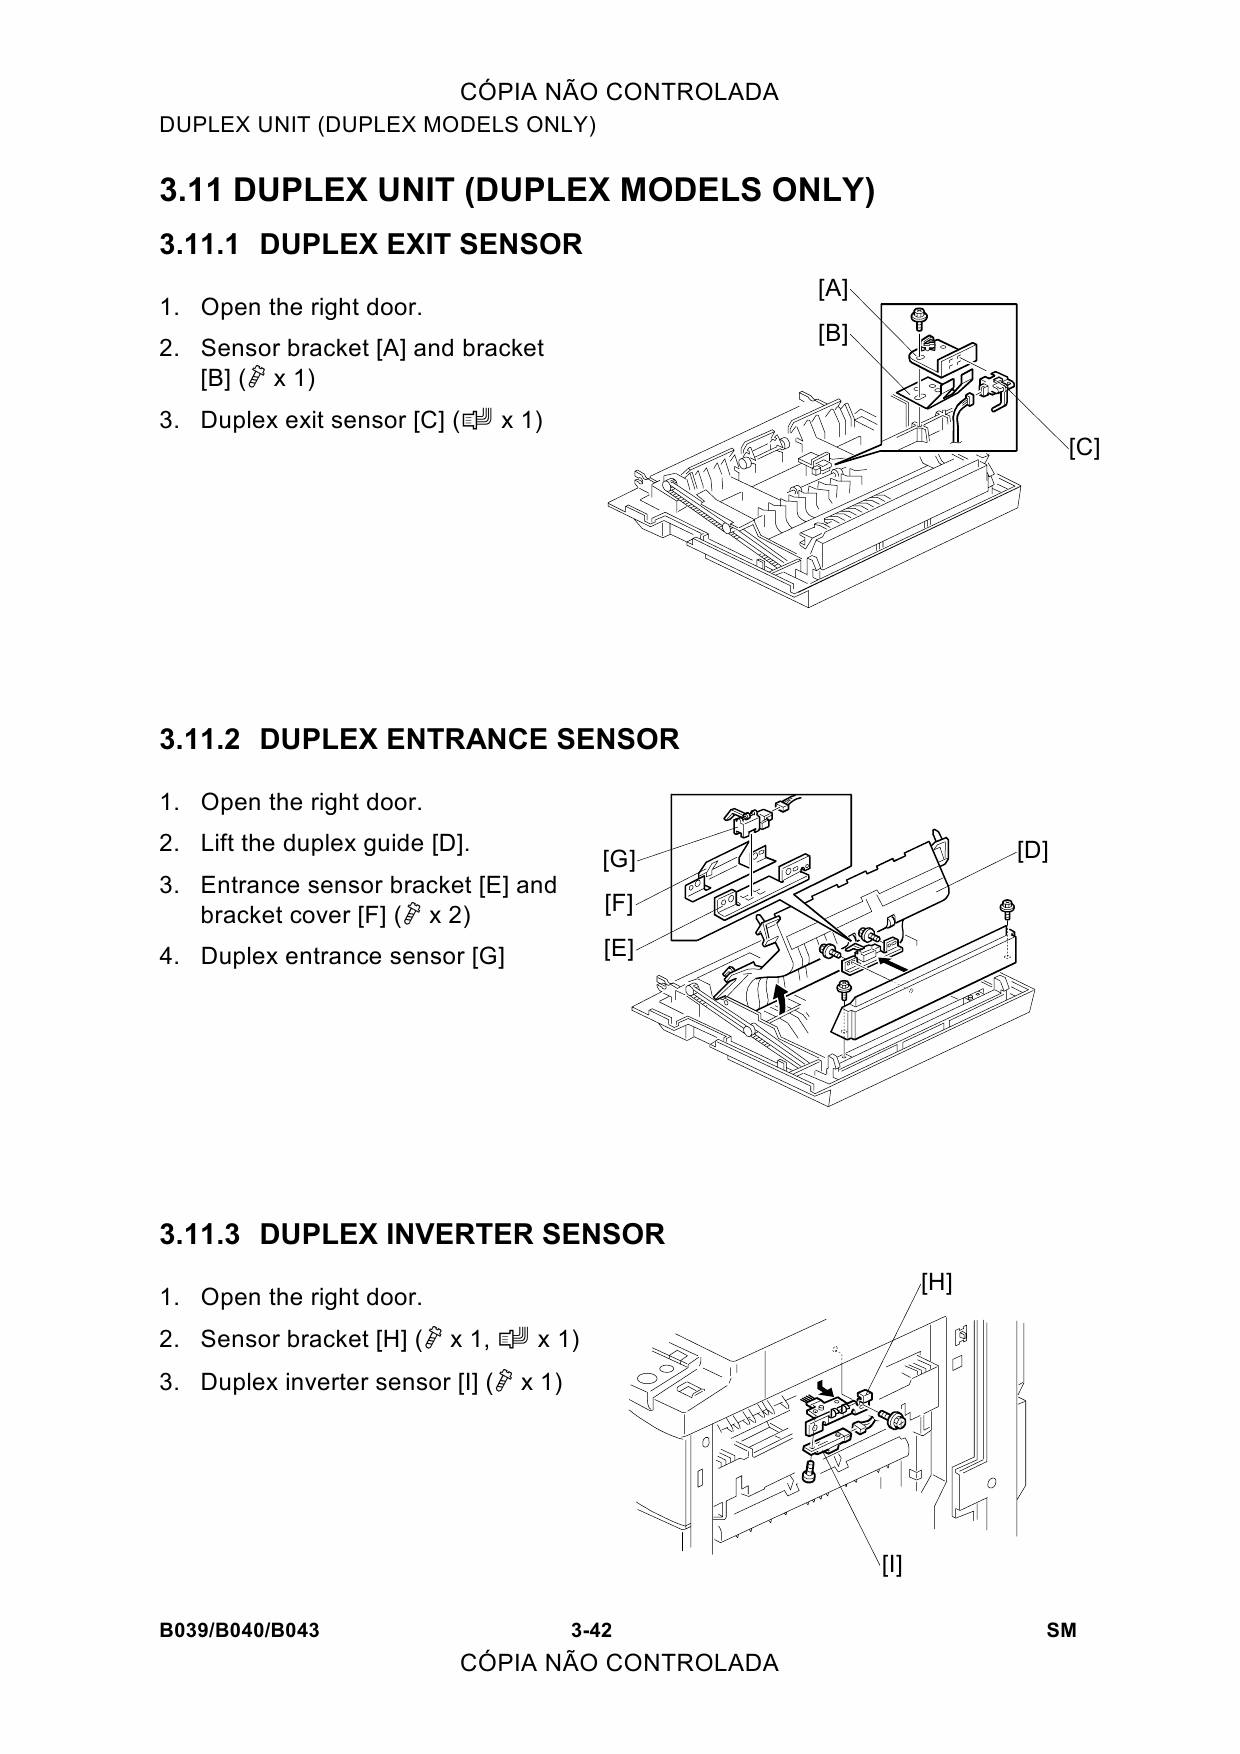 RICOH Aficio 1113 B120 Service Manual-3